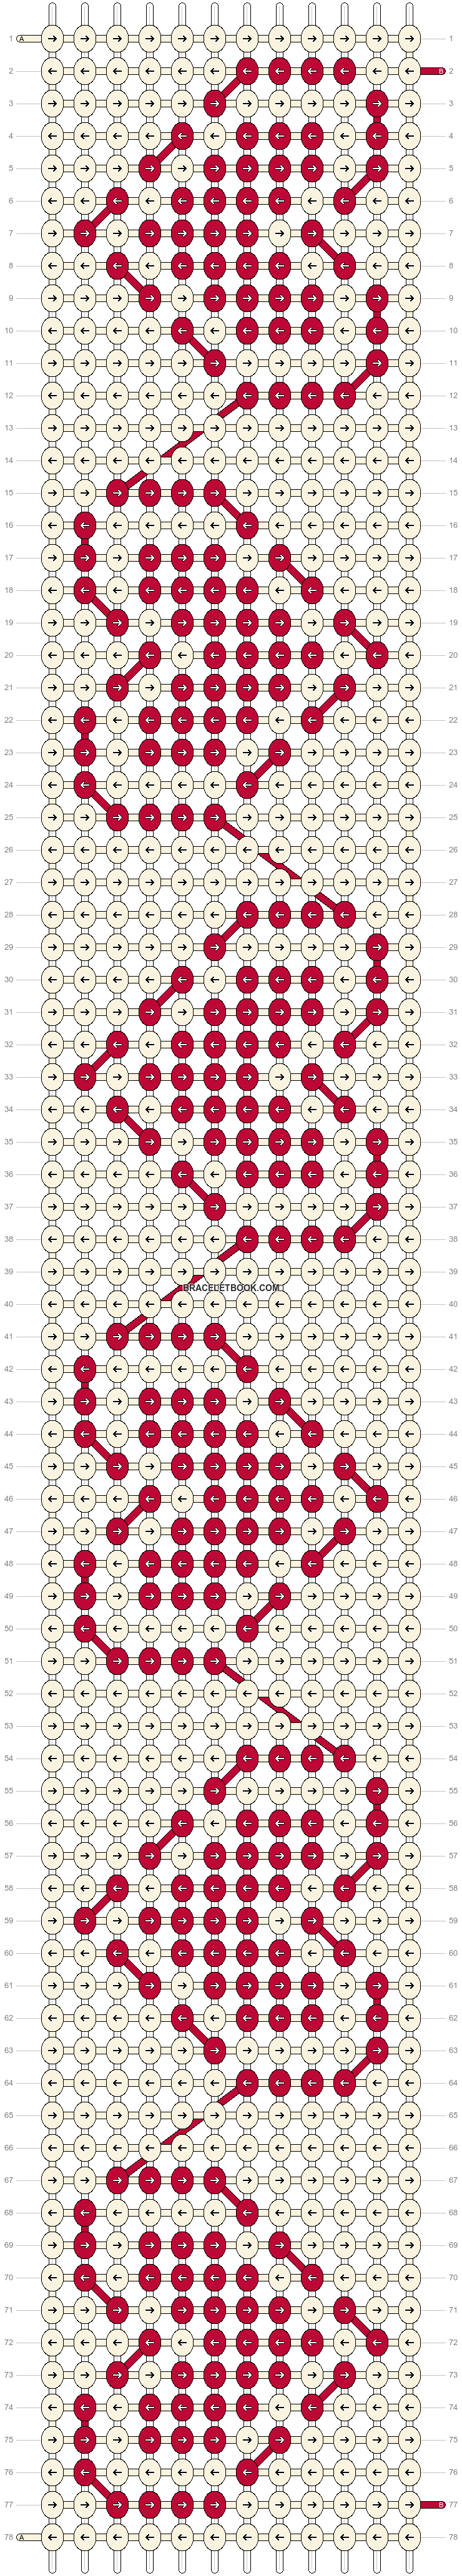 Alpha pattern #73364 pattern